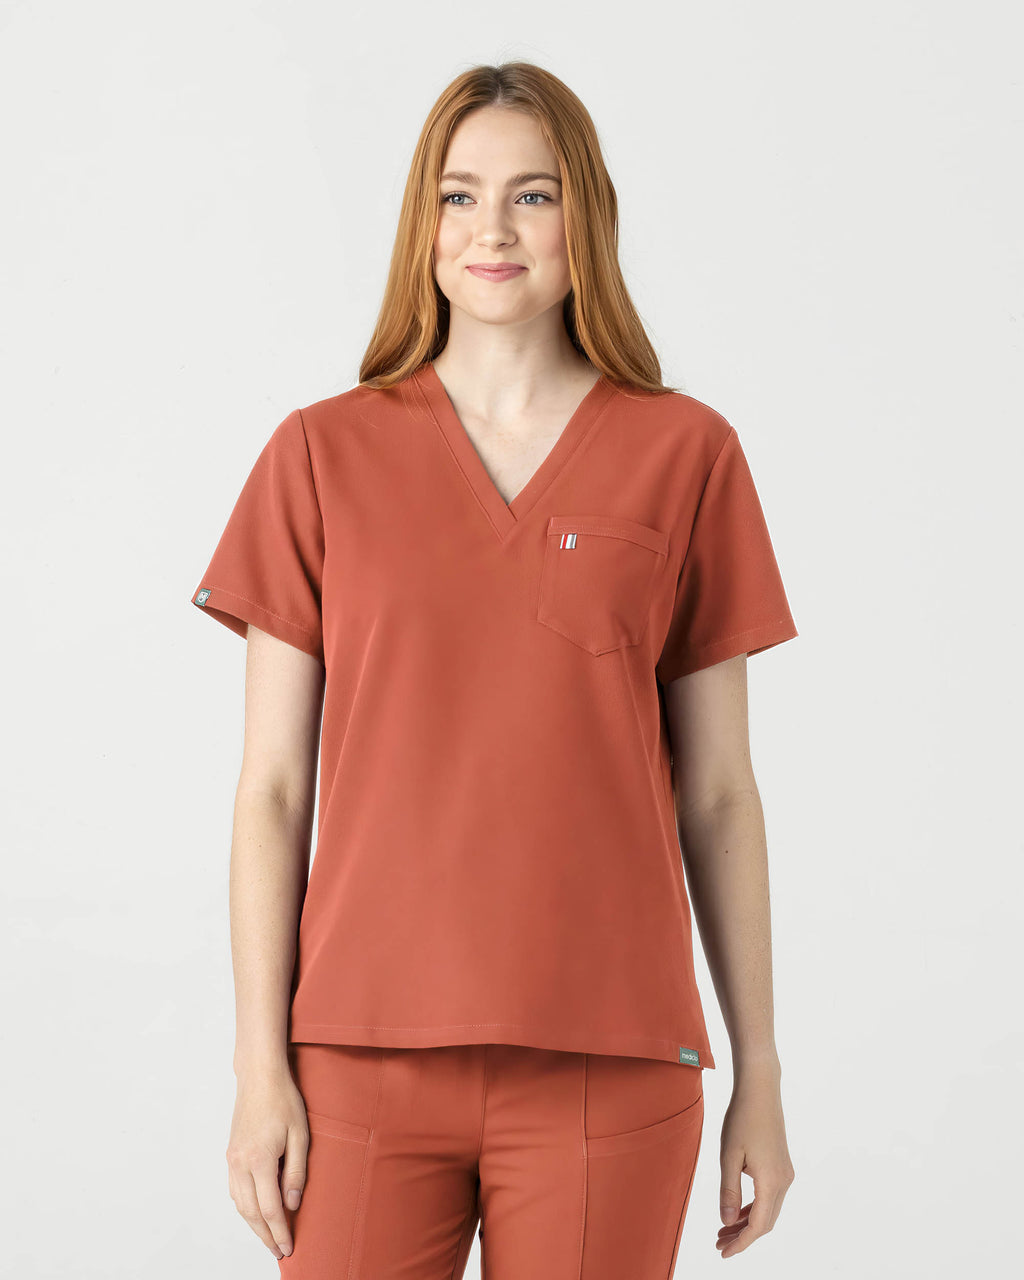 Knya med Women's Long Sleeves Underscrubs Gown Hospital Scrub